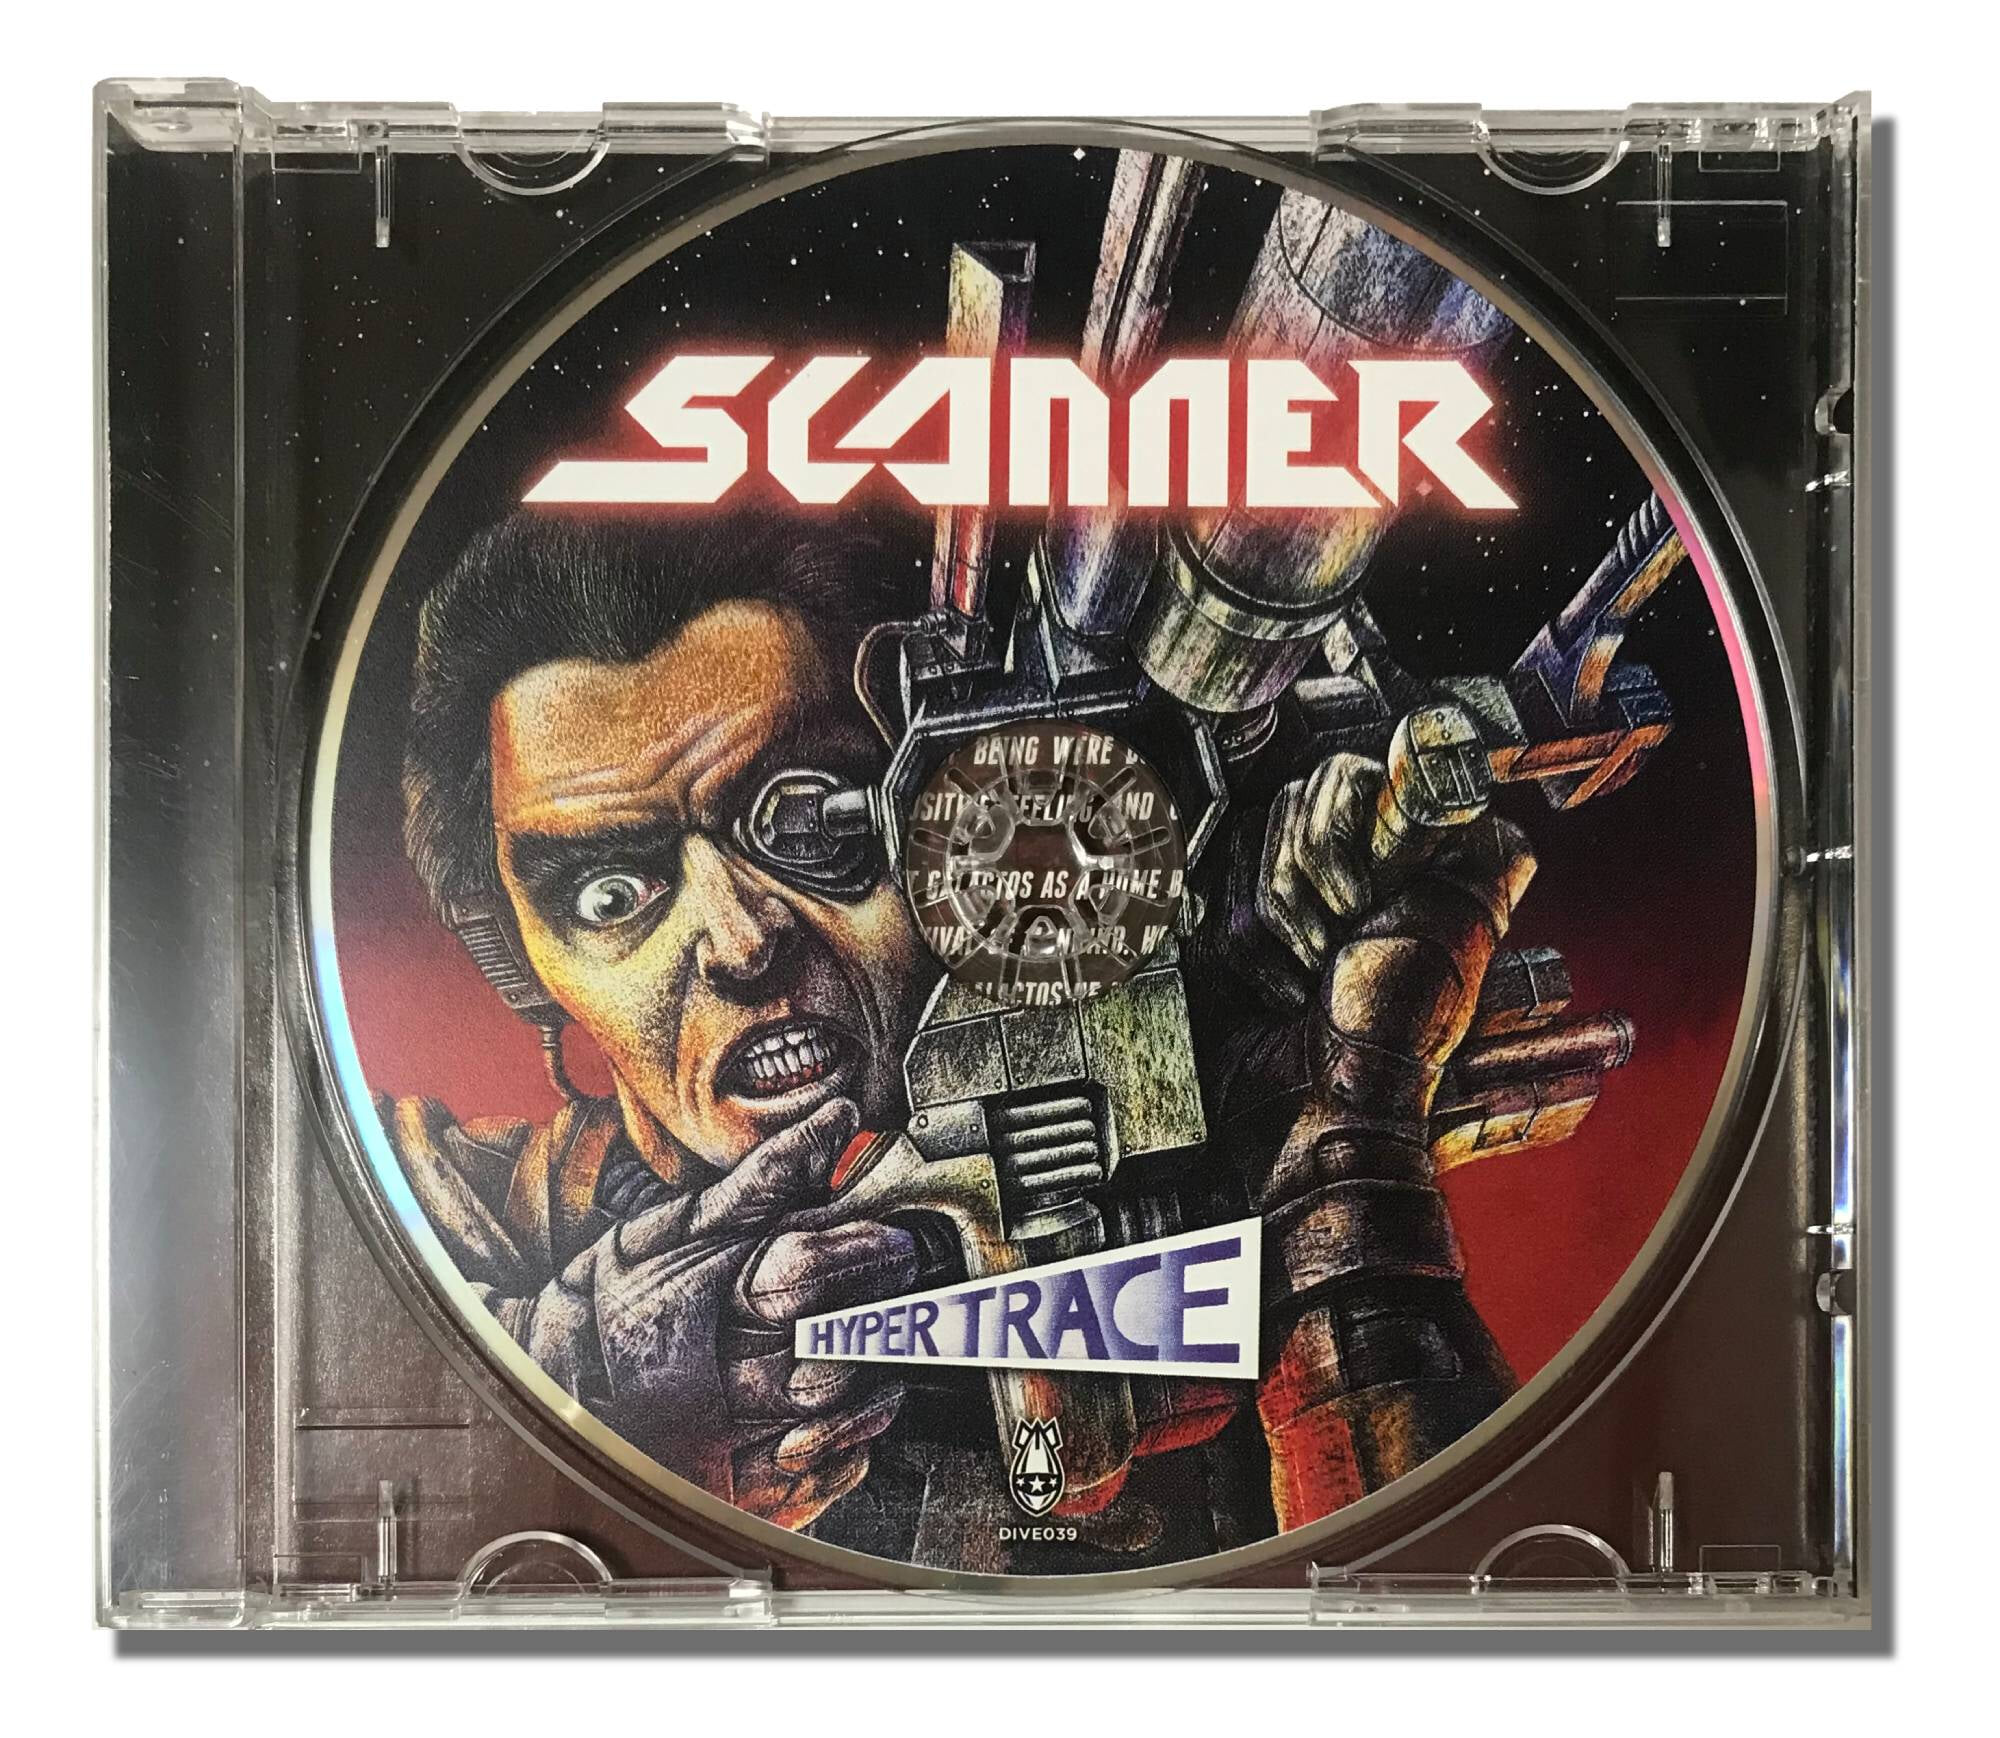 Scanner - Hypertrace (USA CD 2013년 재발매)